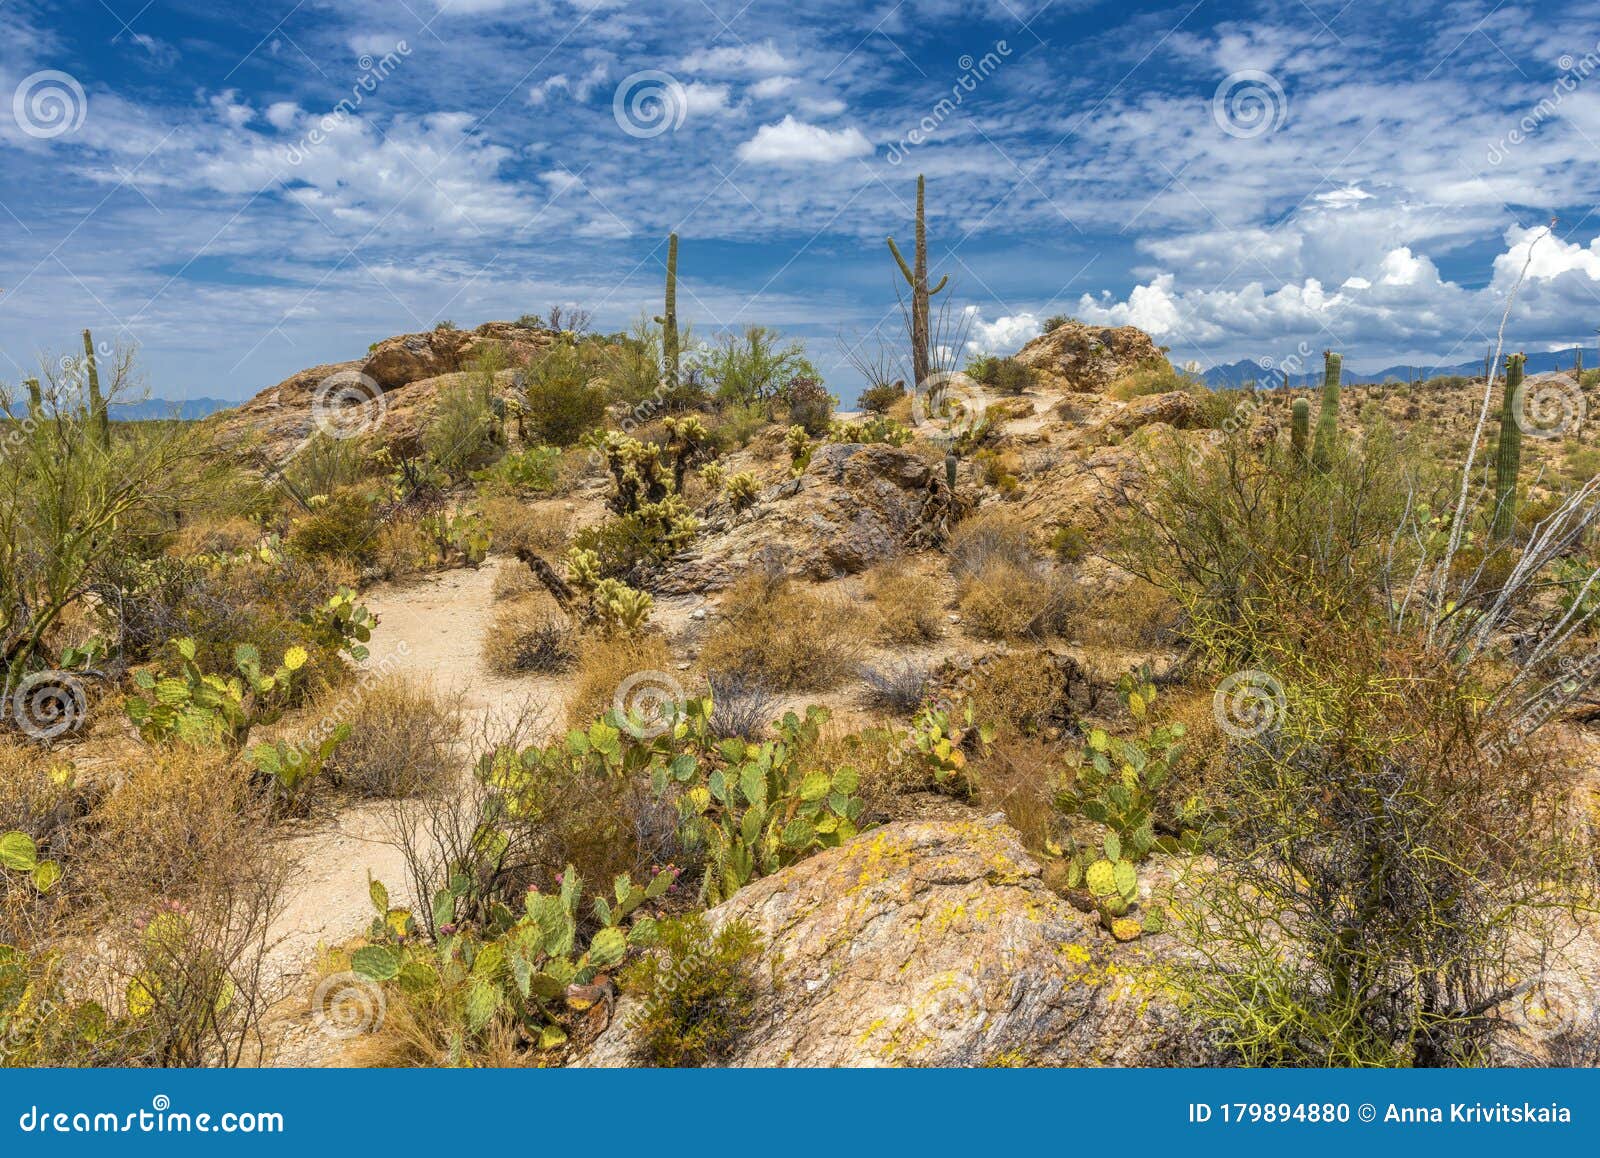 Sonoran Desert Landscape with Tall Cactus, Barrel Cacti, Rocky ...